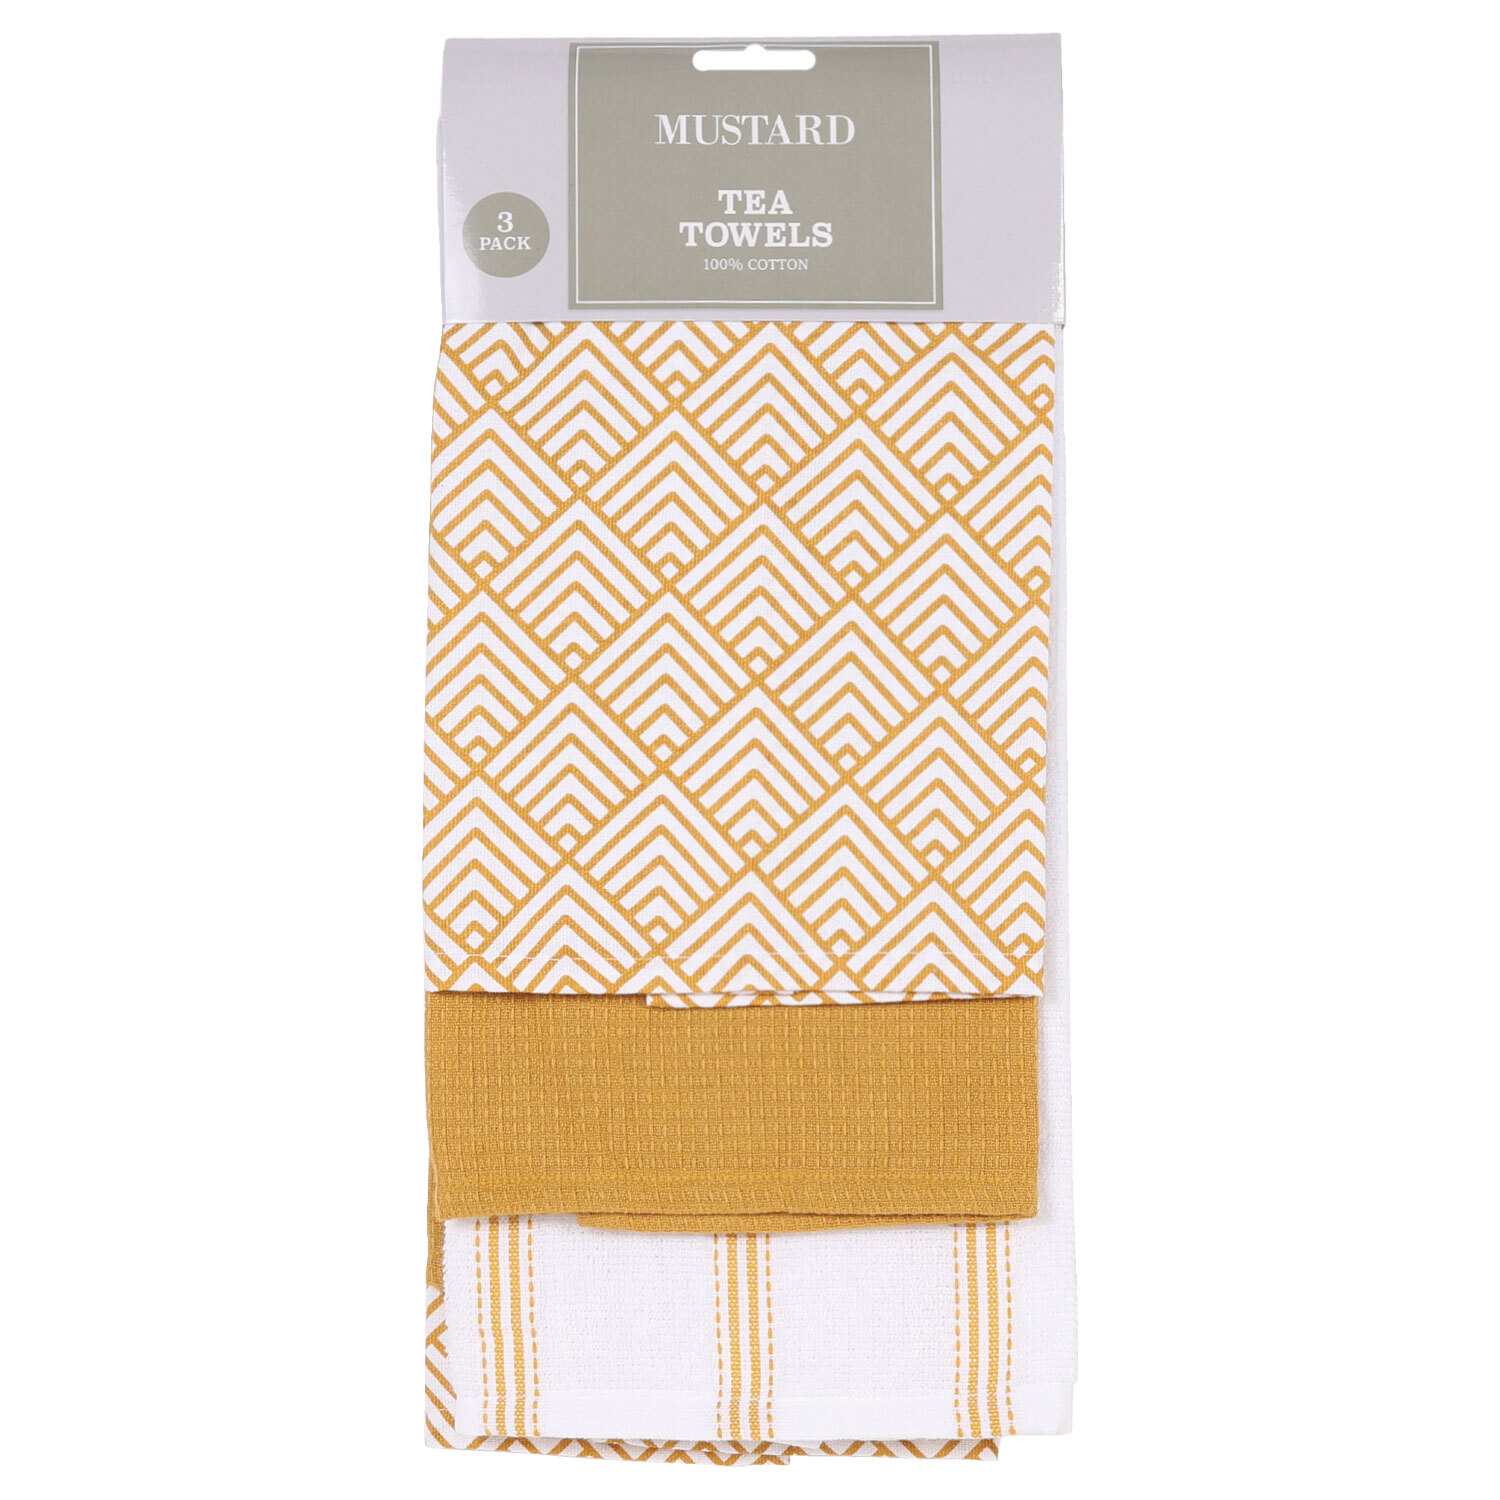 Mustard Tea Towels 3 Pack Image